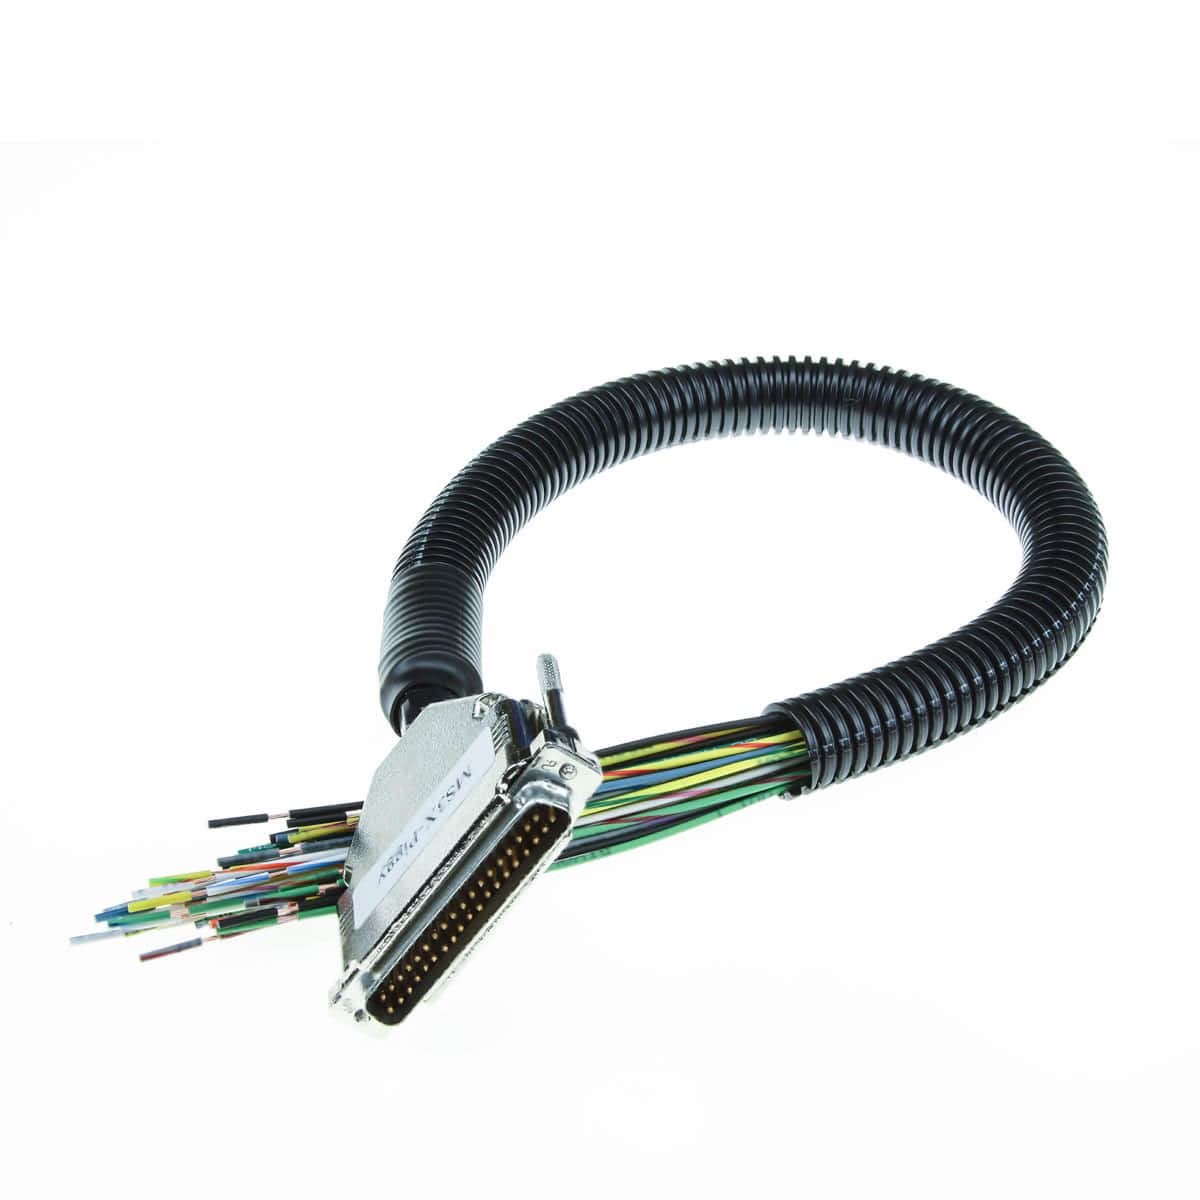 WHITE hi temp automotive 20 gauge TXL wire + 10 STRIPED color wiring options